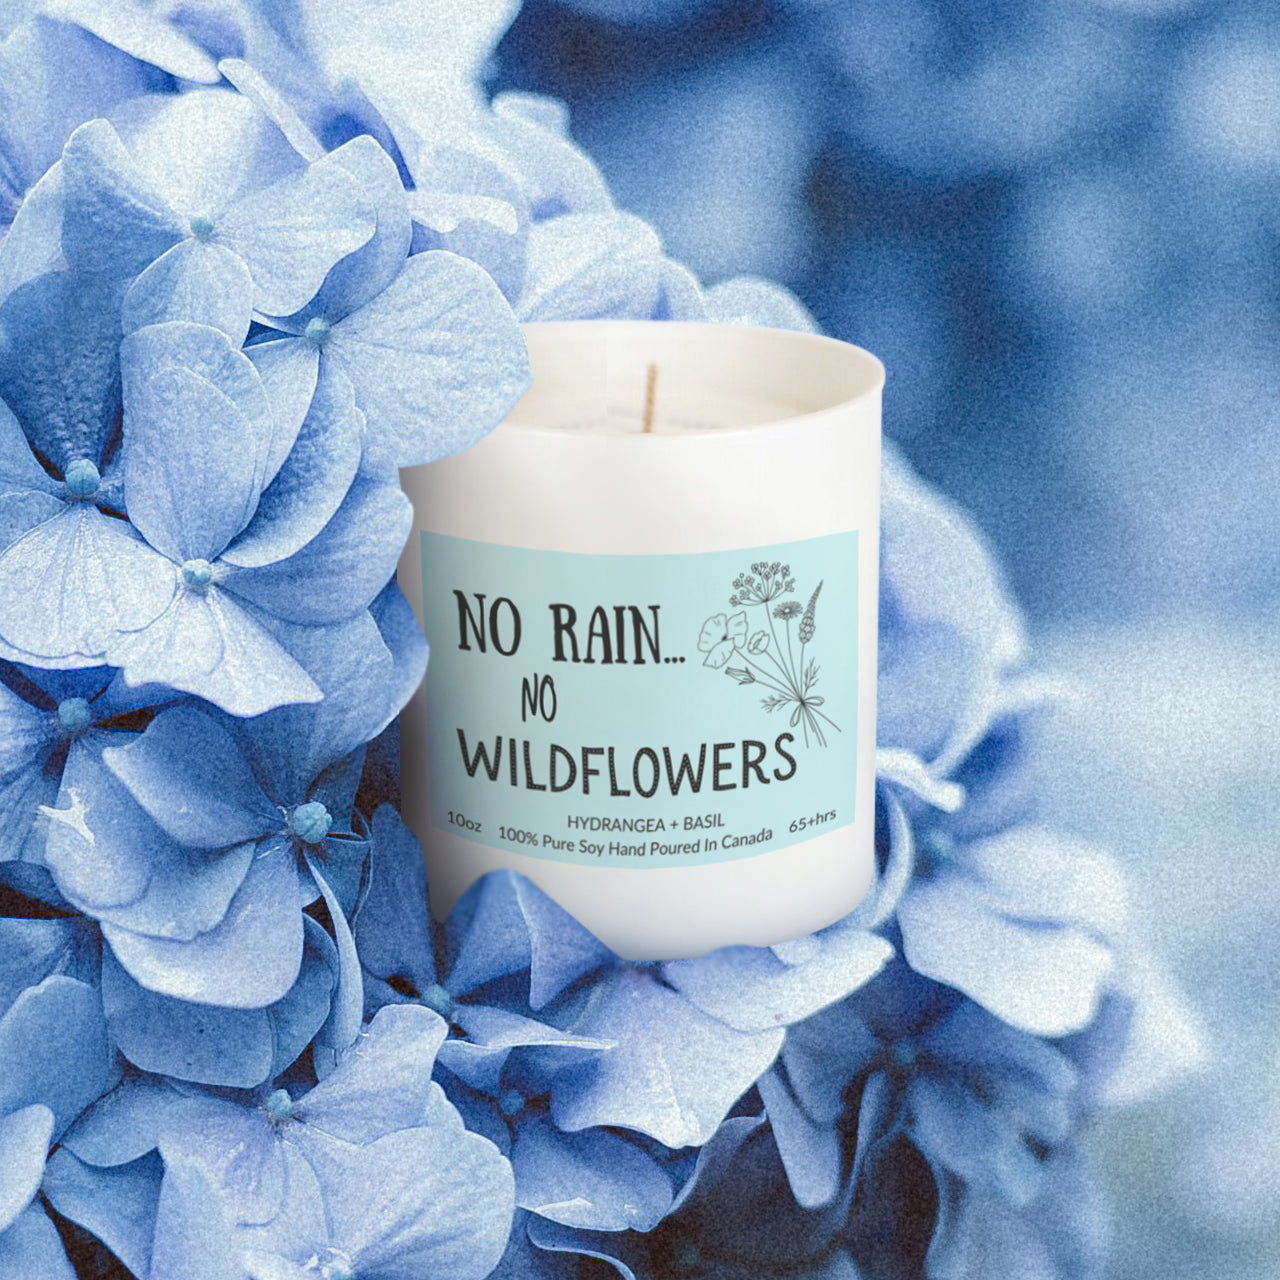 Wildflower Collection - No Rain...No Wildflowers